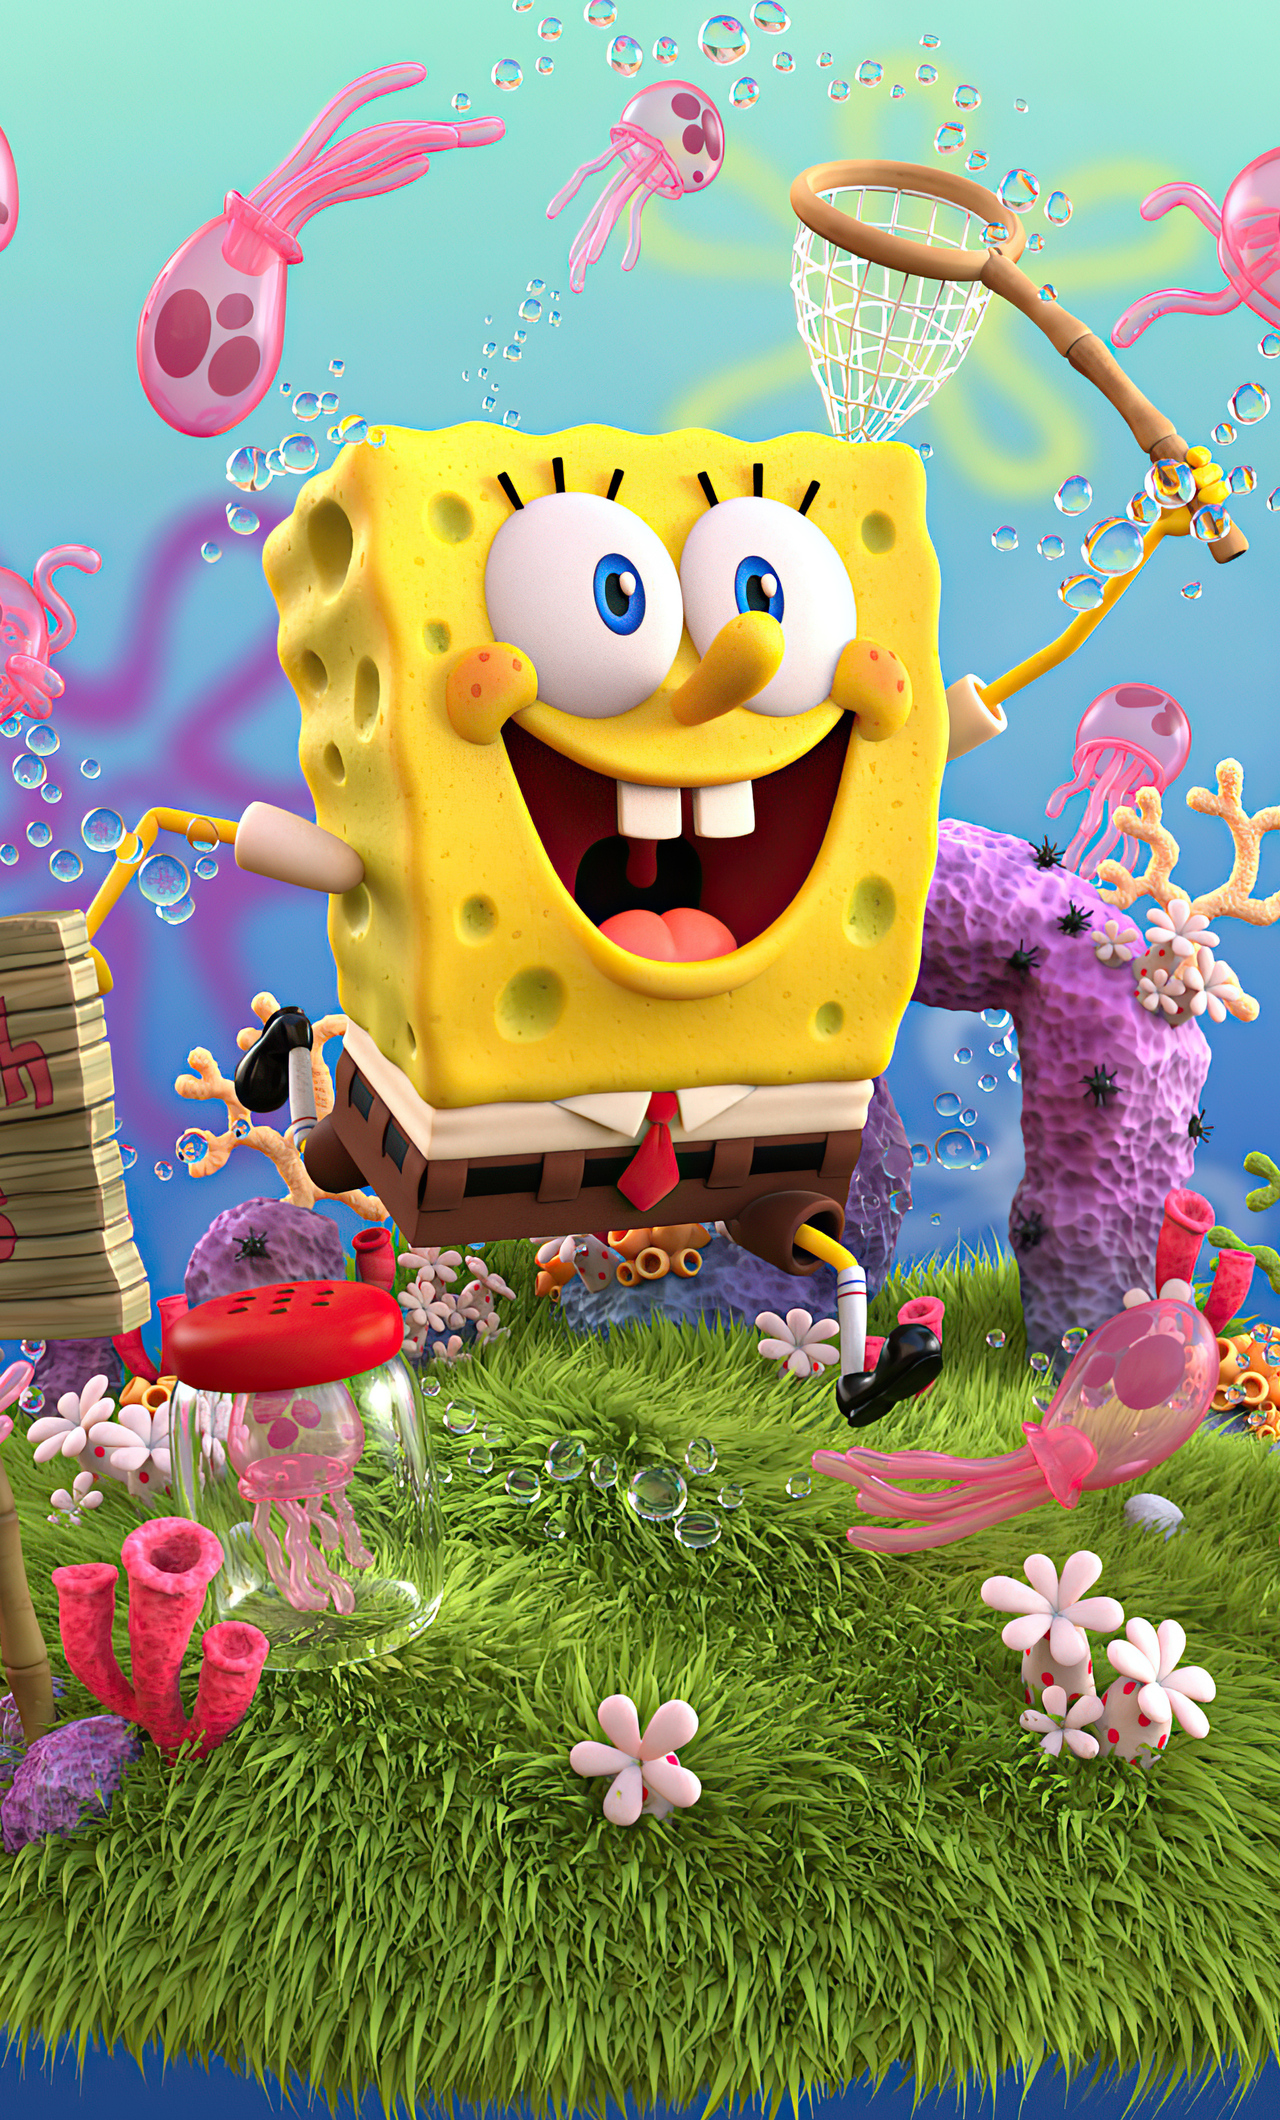 SpongeBob SquarePants 4k 2020 iPhone HD 4k Wallpaper, Image, Background, Photo and Picture